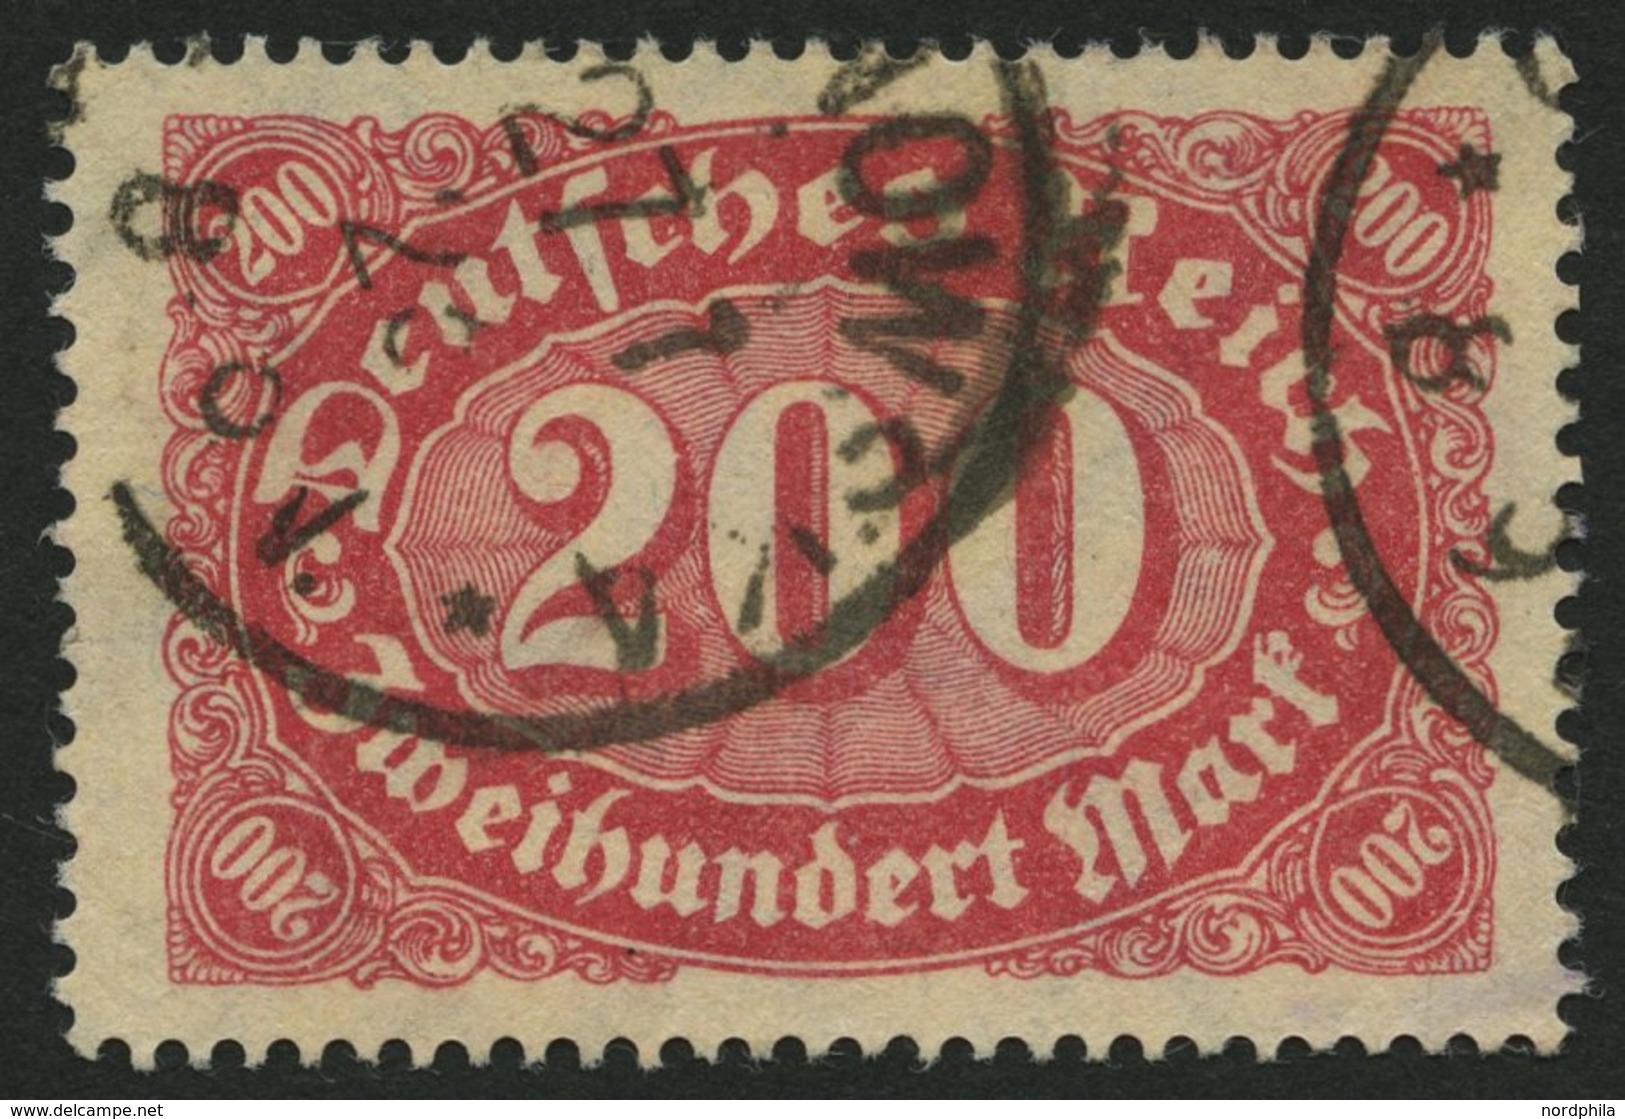 Dt. Reich 248b O, 1923, 200 M. Rotlila, Eckbug Sonst Pracht, Gepr. Infla, Mi. 100.- - Used Stamps